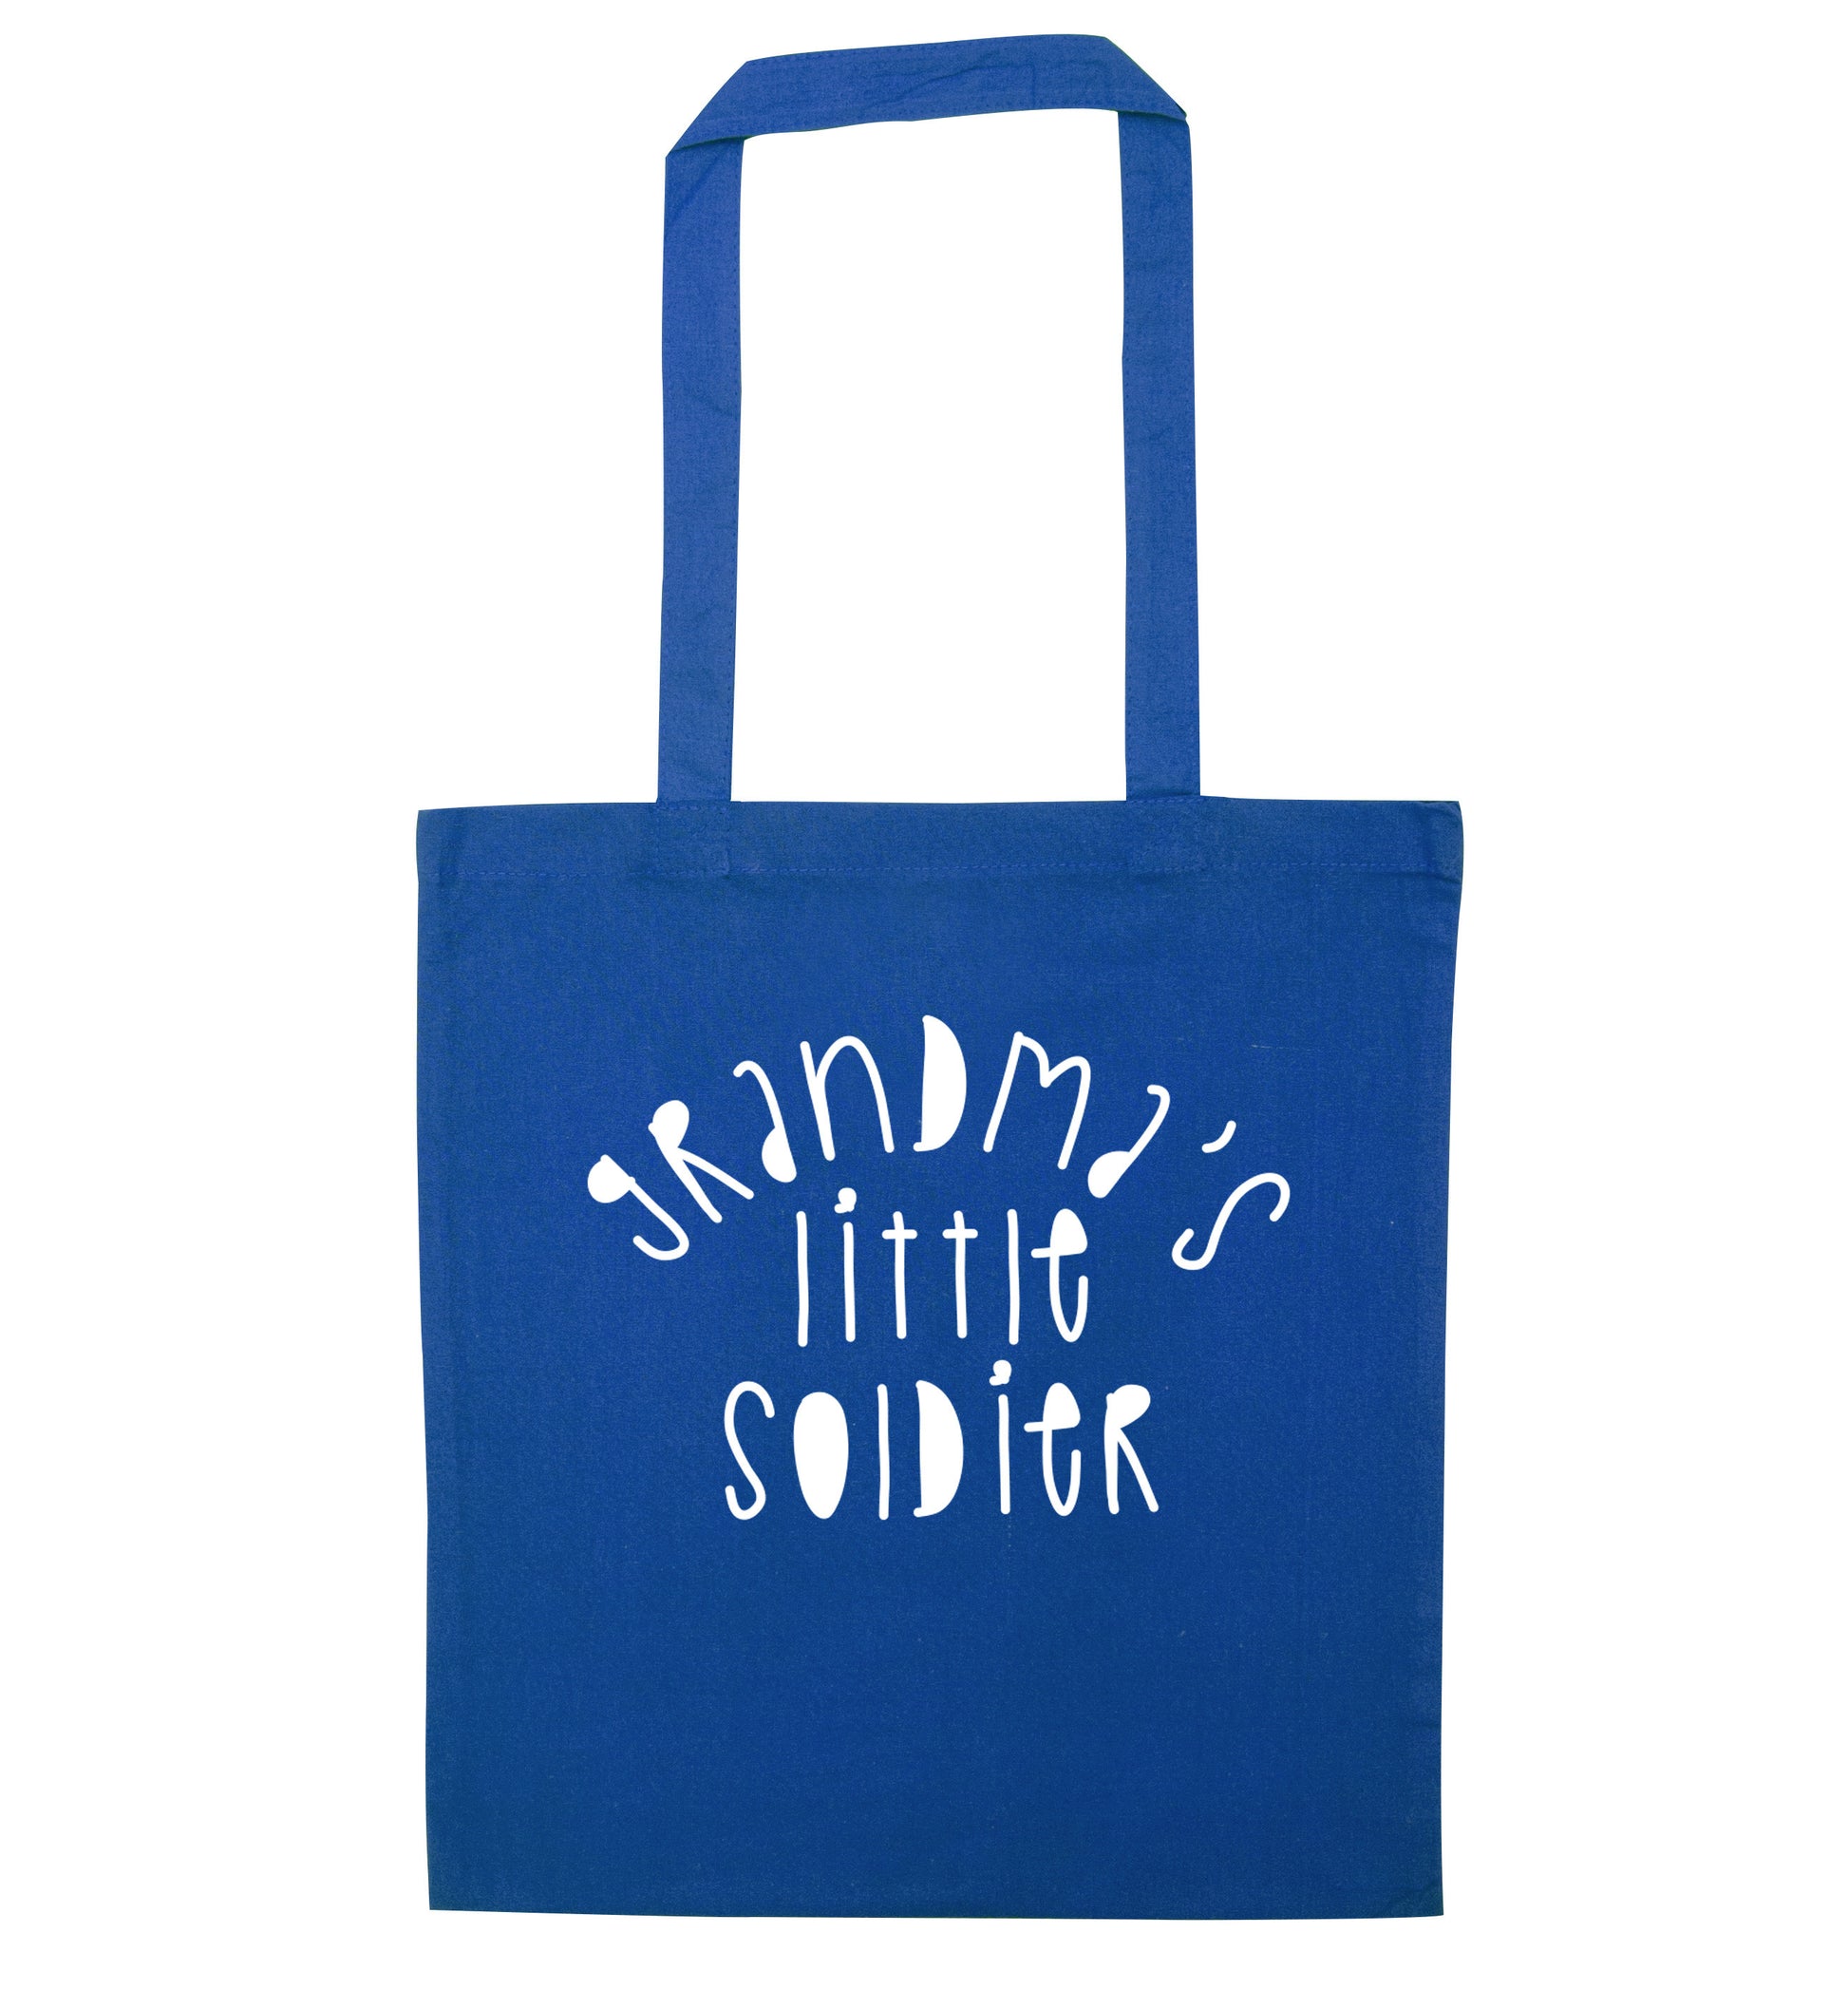 Grandma's little soldier blue tote bag